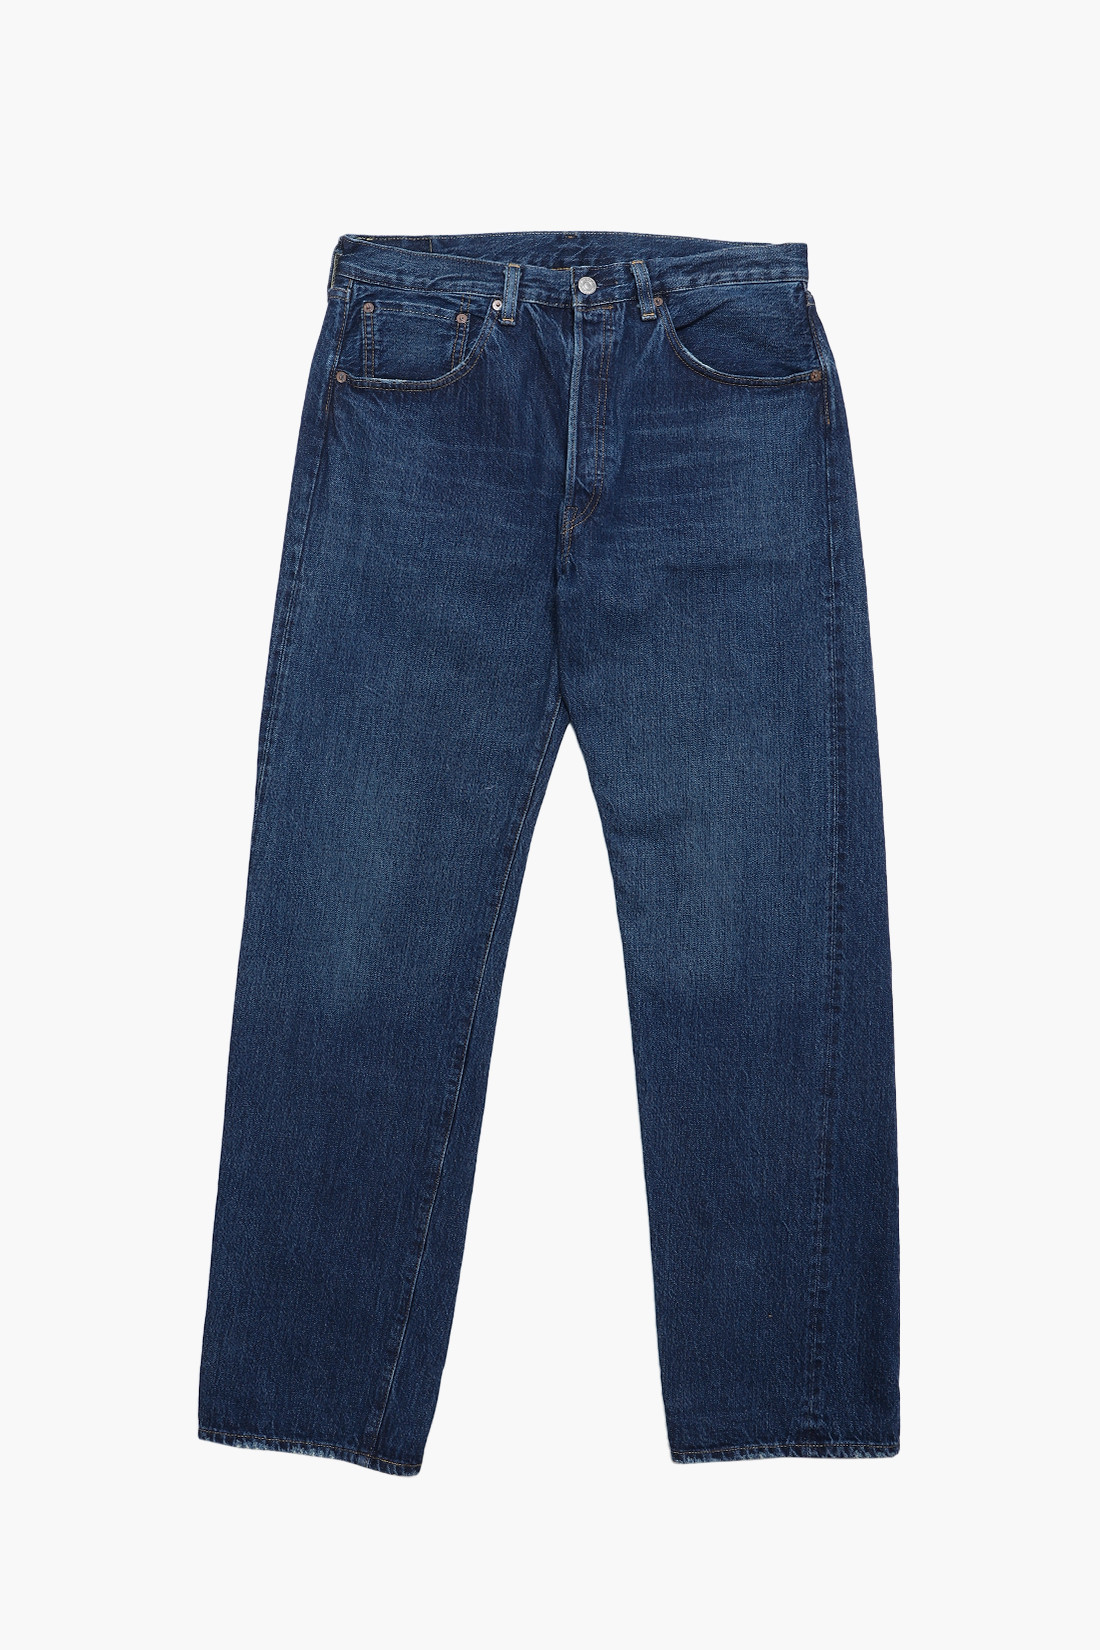 levi s vintage clothing 1955 501 jeans taraval